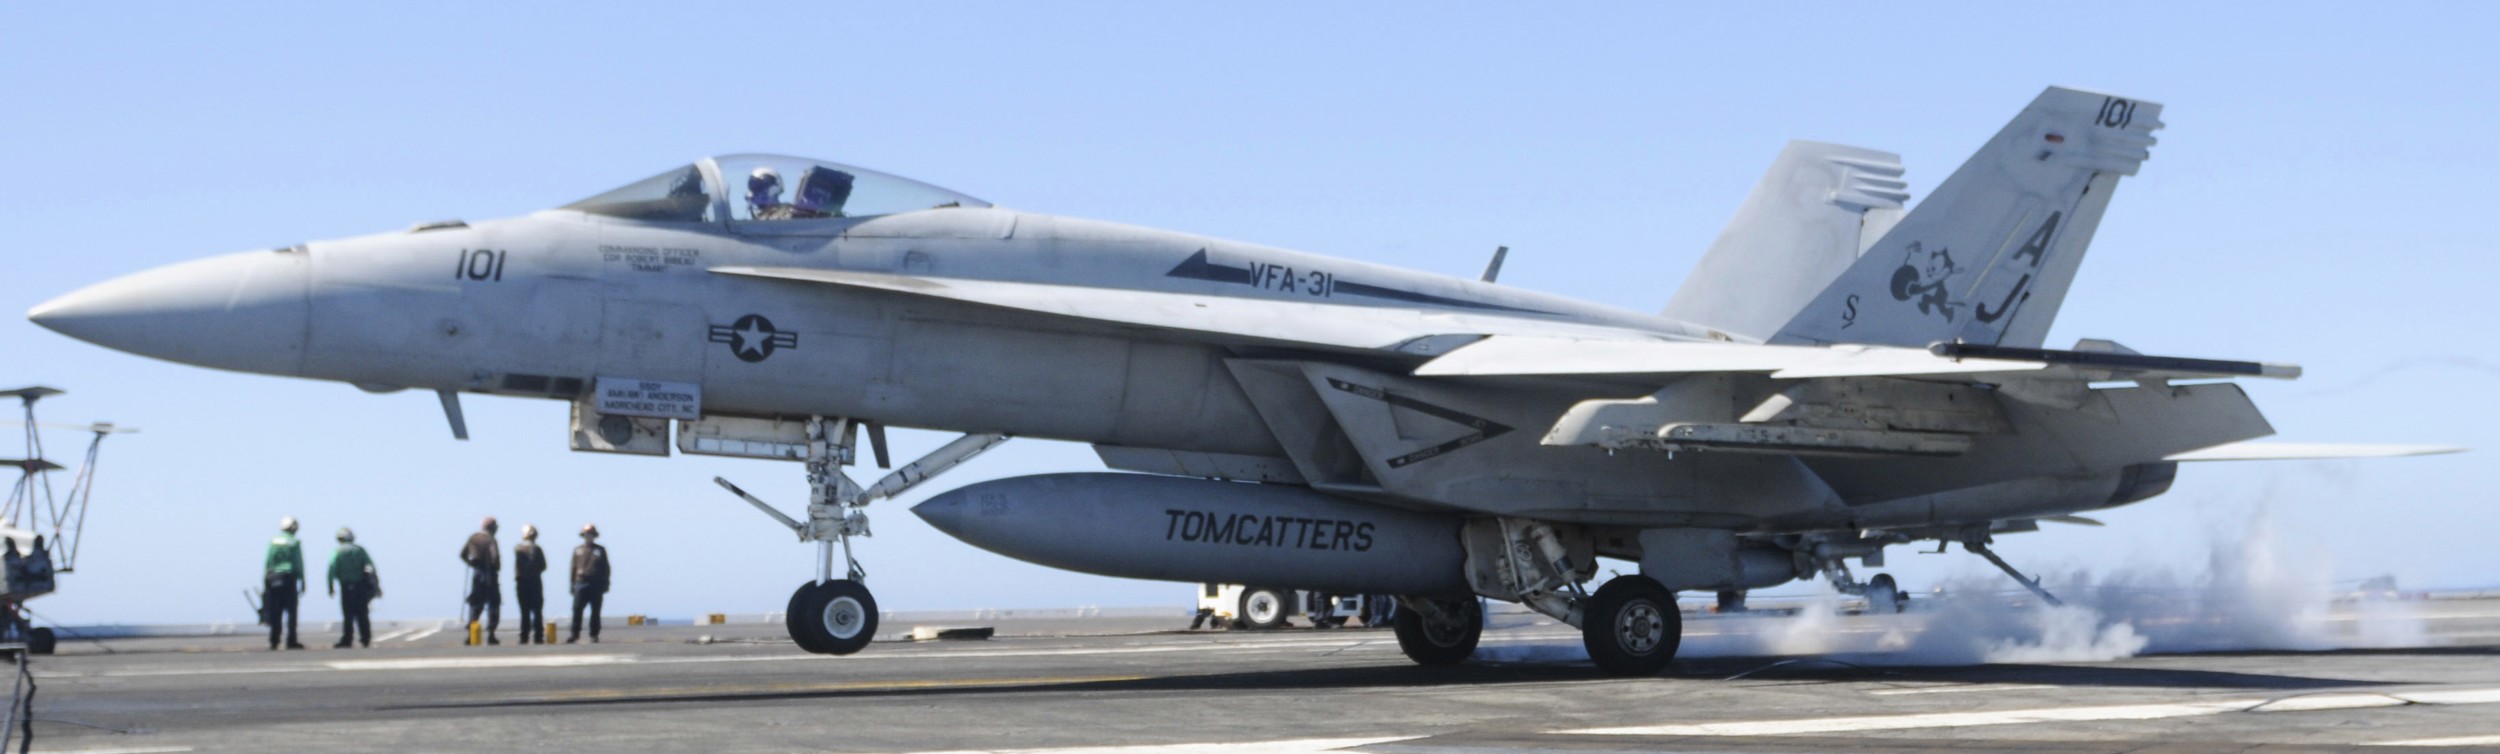 vfa-31 tomcatters strike fighter squadron f/a-18e super hornet us navy cvn-77 uss george h. w. bush cvw-8 30